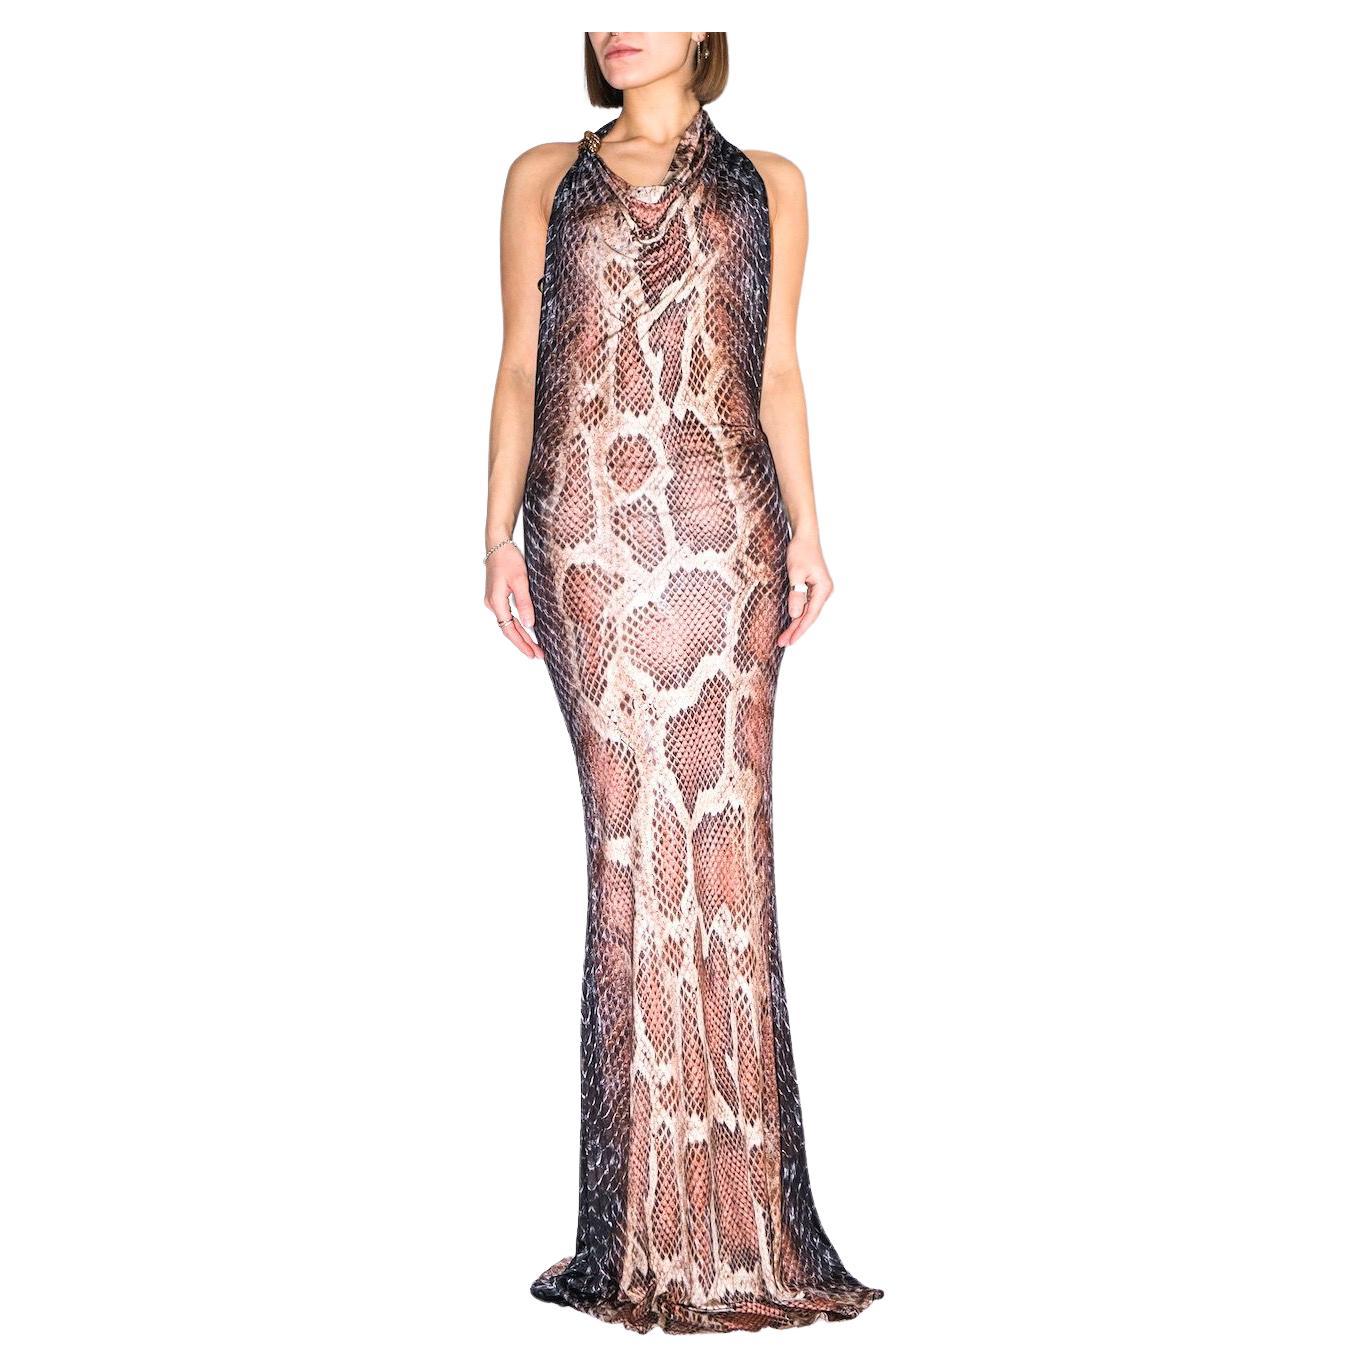  Roberto Cavalli Floor-length dress with snake print sz EU 42